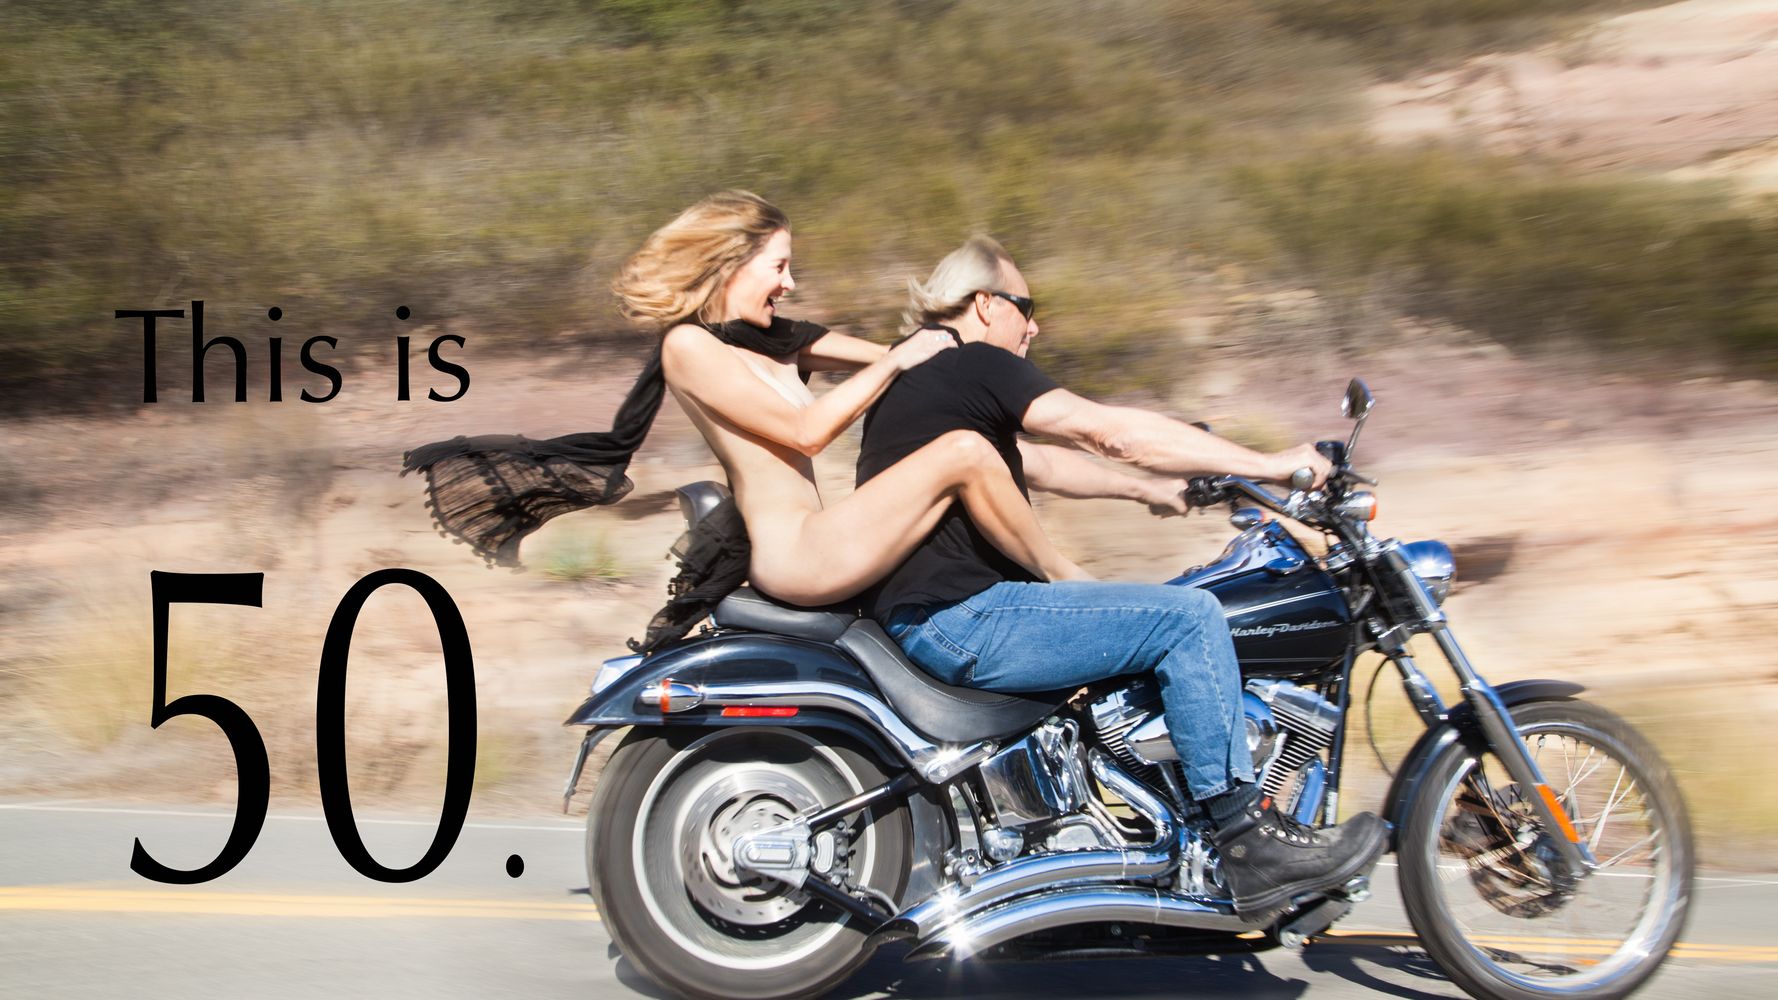 Nude Women Motorcycle Advertisement